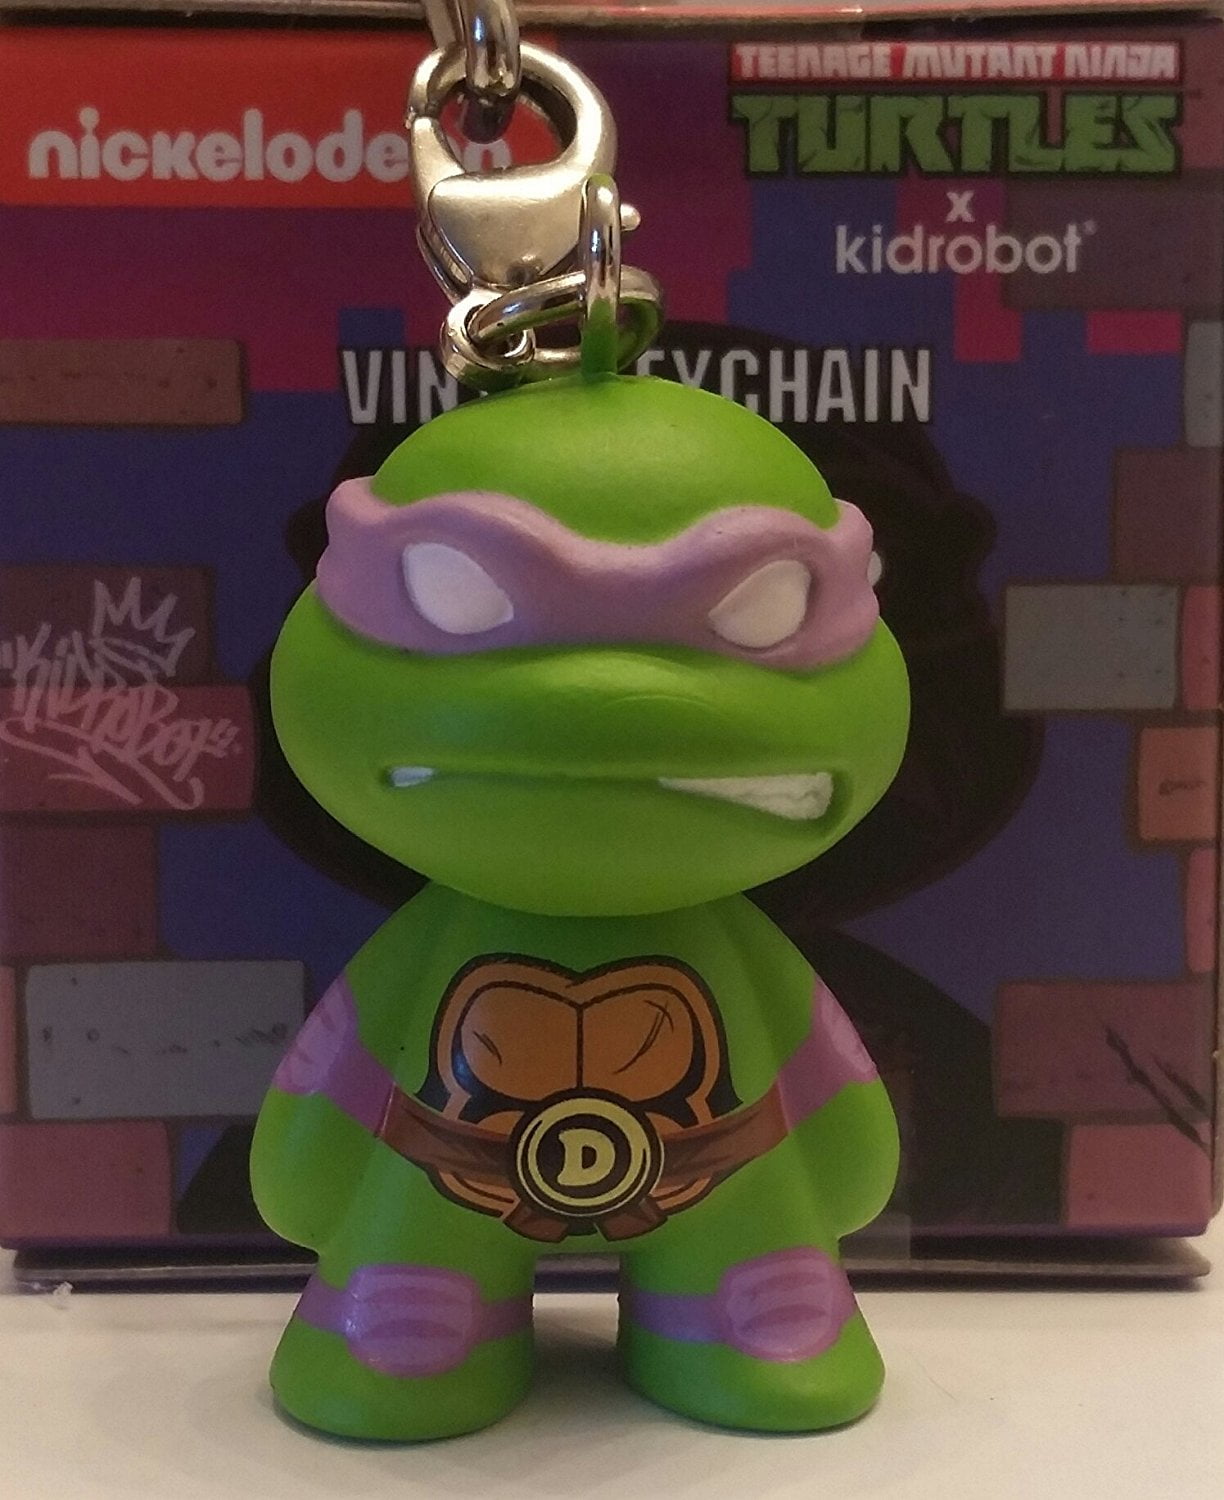 Additional Keychains Ship Free!! Kidrobot TMNT Ninja Turtles Donatello 